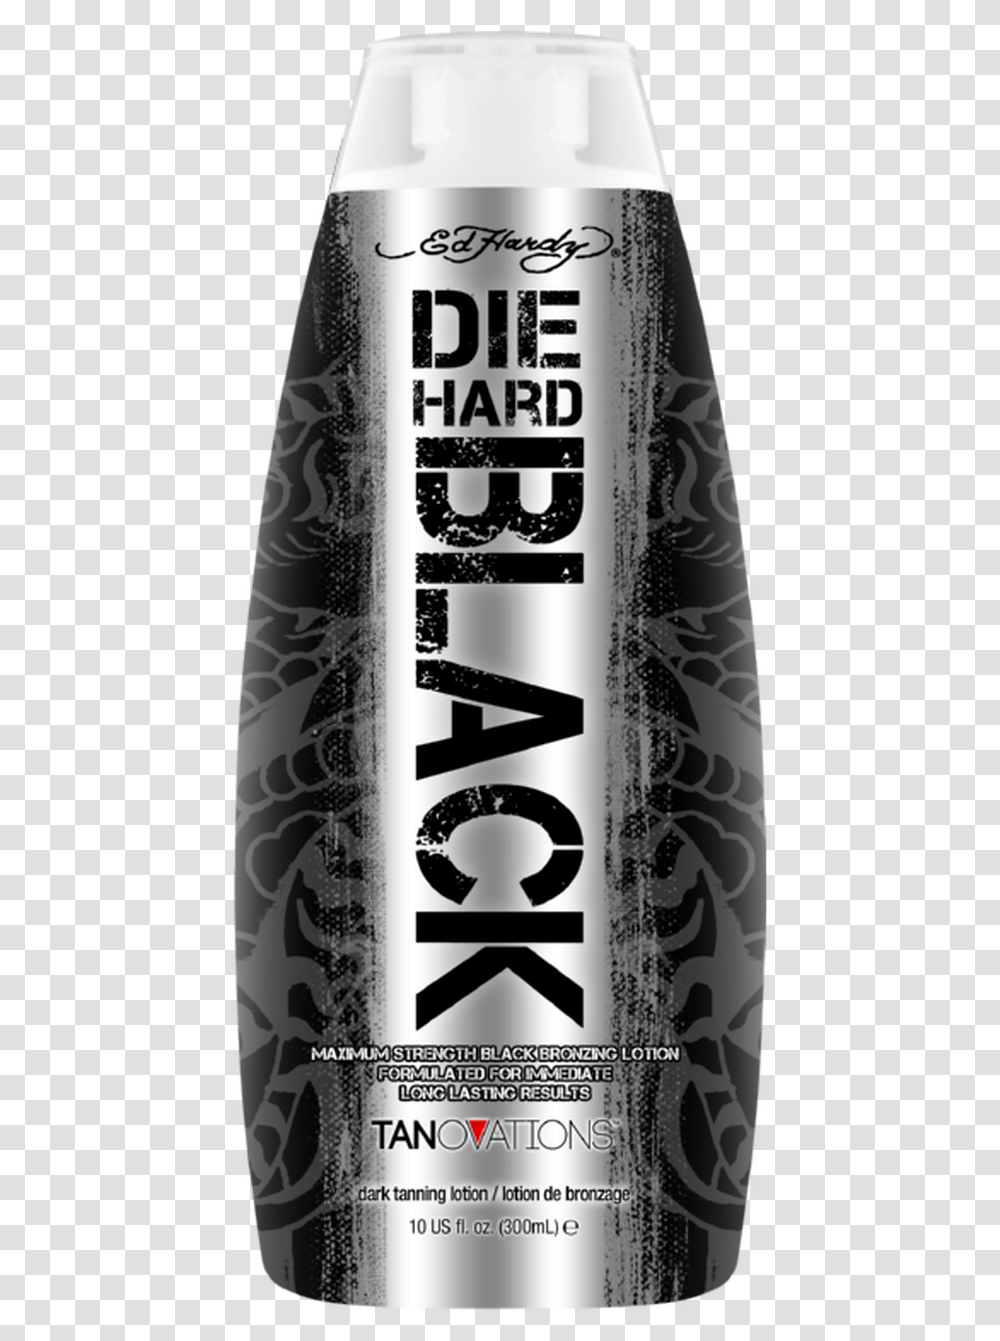 Ed Hardy Die Hard Black Maximum Strength Black Bronzing Energy Drink, Tin, Can, Spray Can Transparent Png